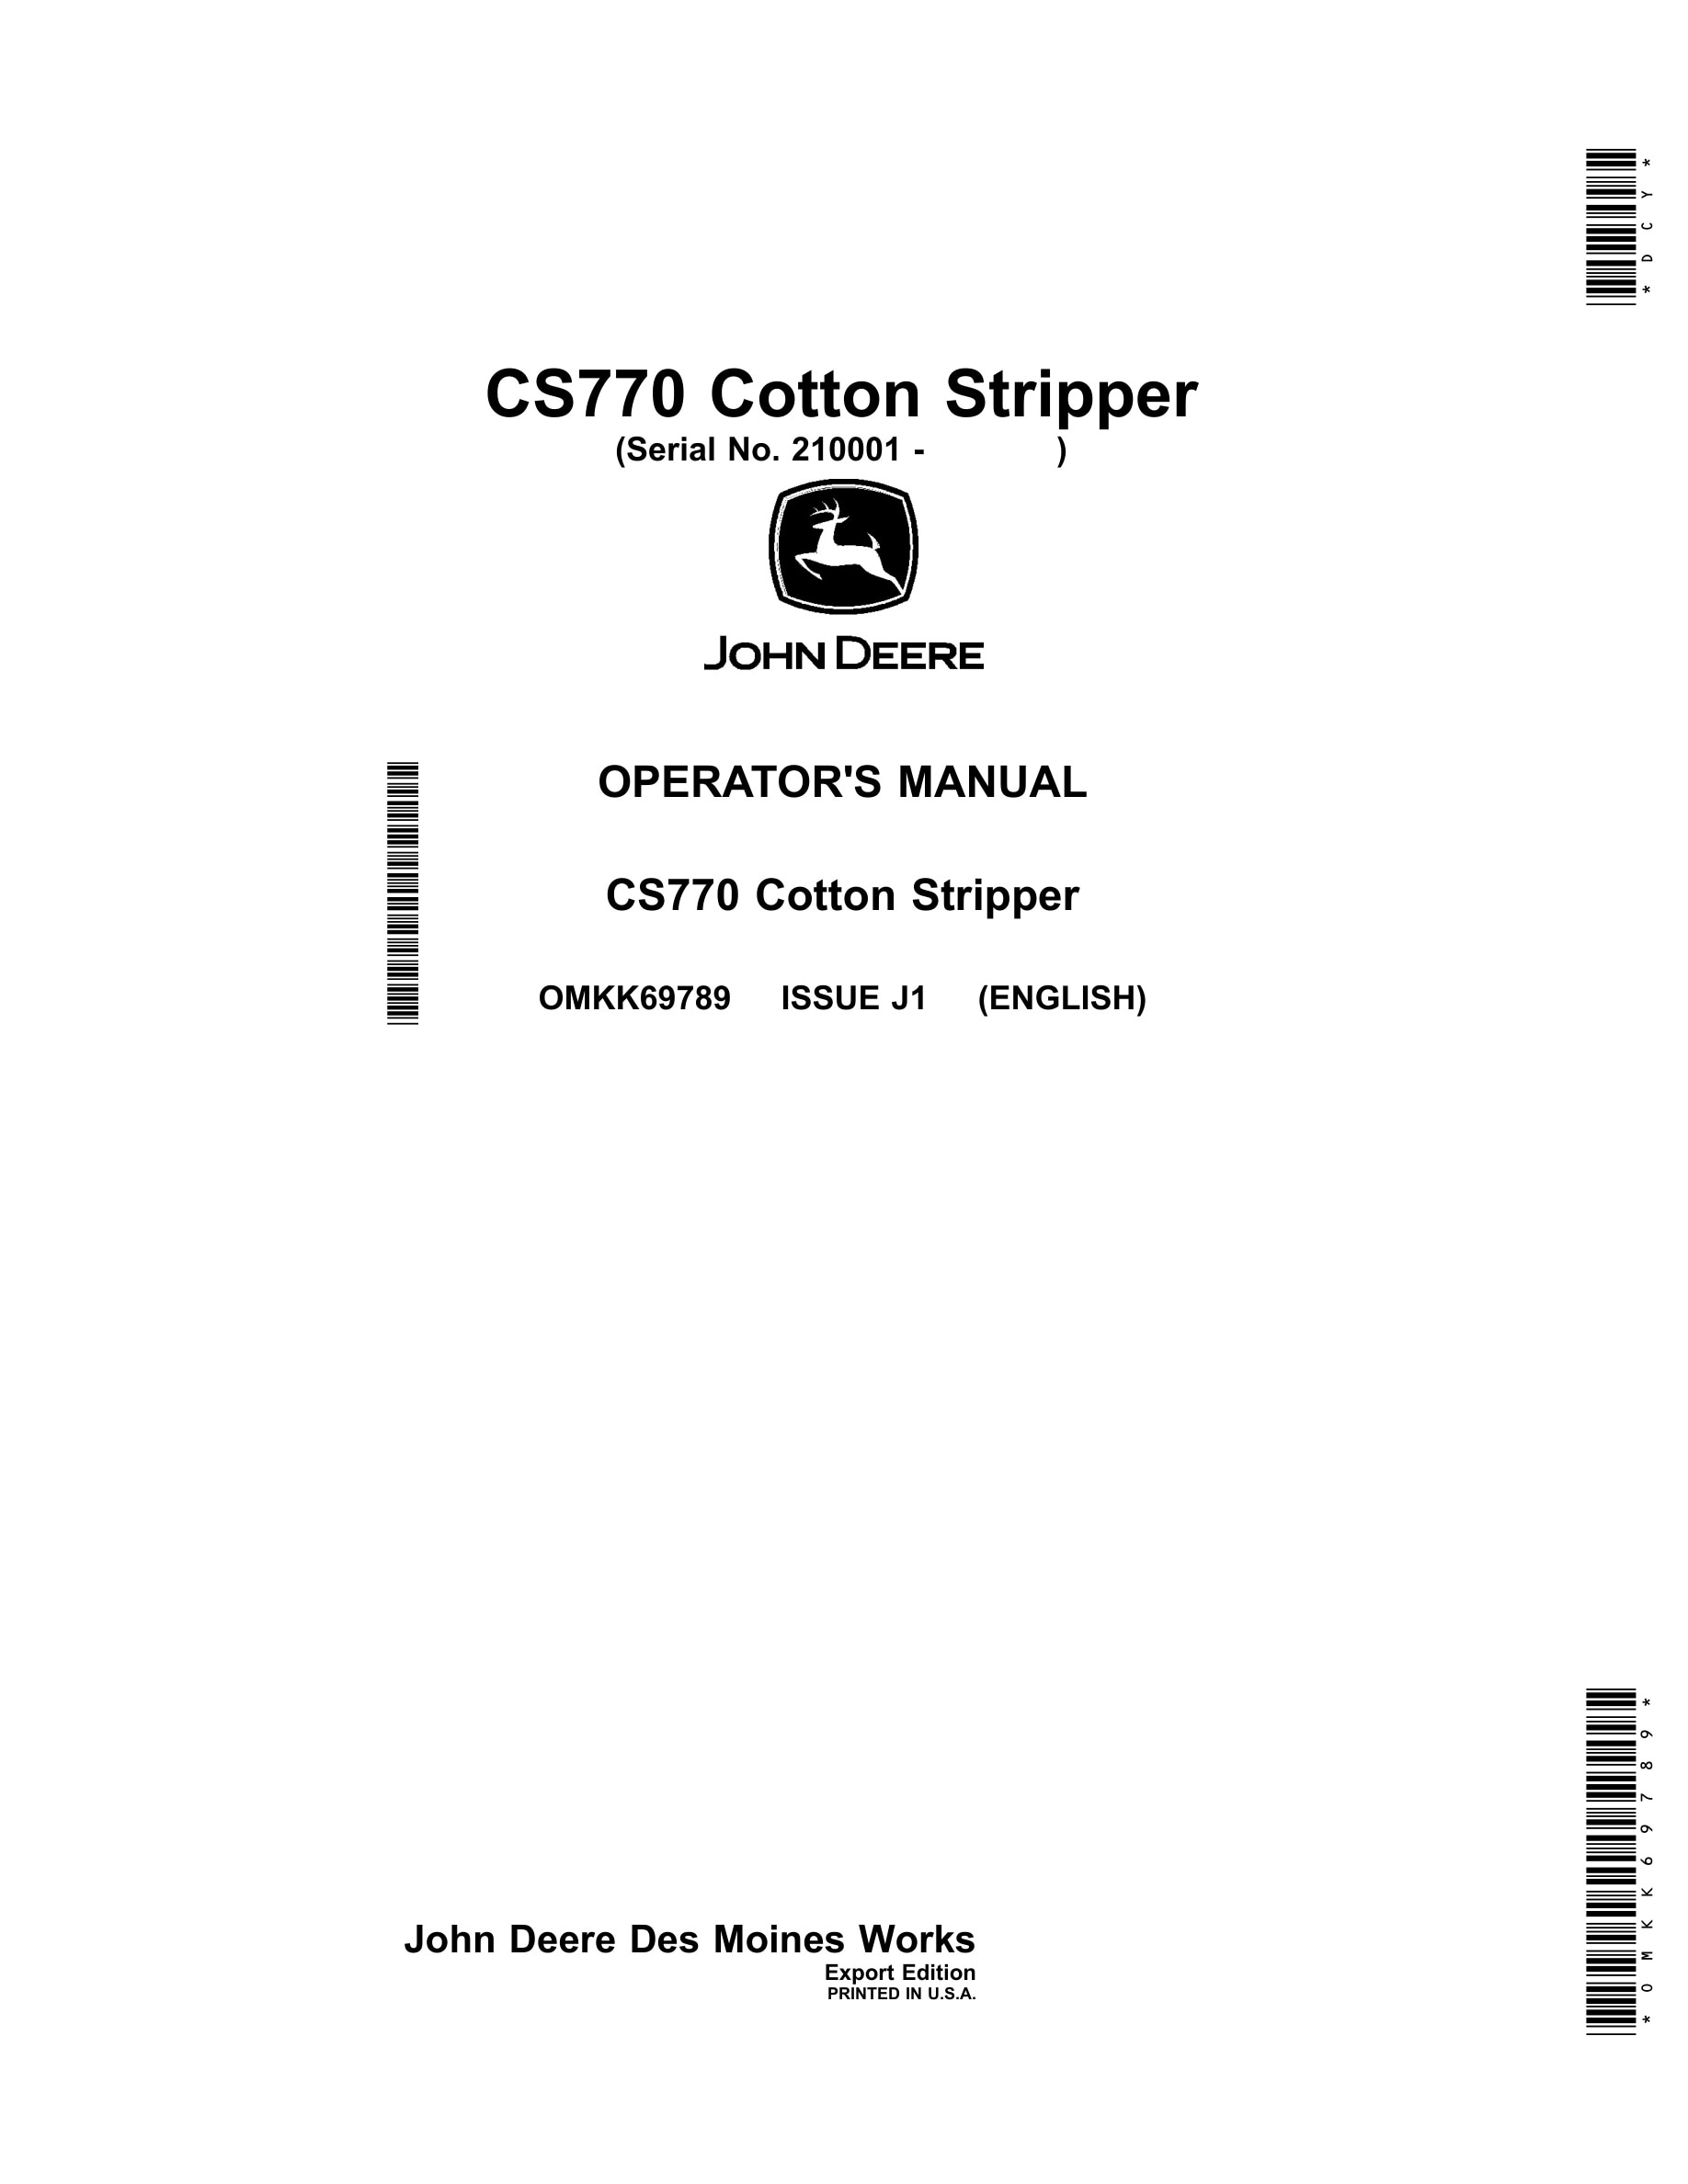 John Deere CS770 Cotton Stripper Operator Manual OMKK69789-1